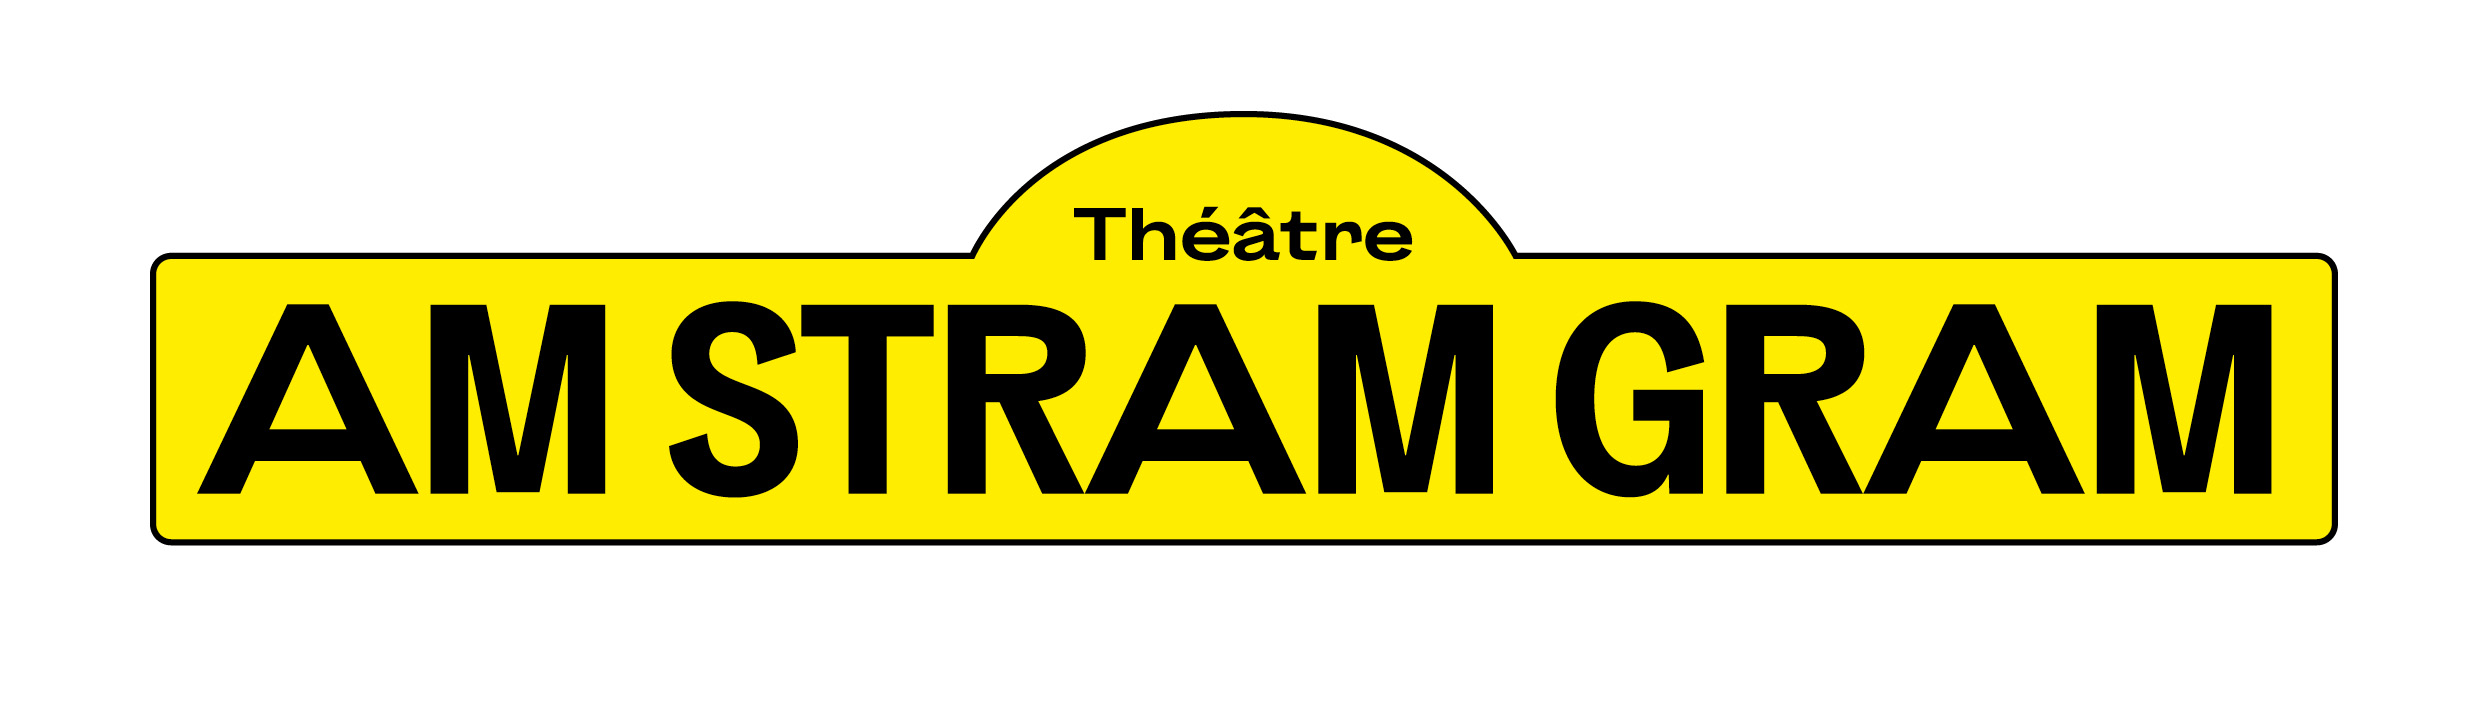 Logo du Théâtre Am Stram Gram